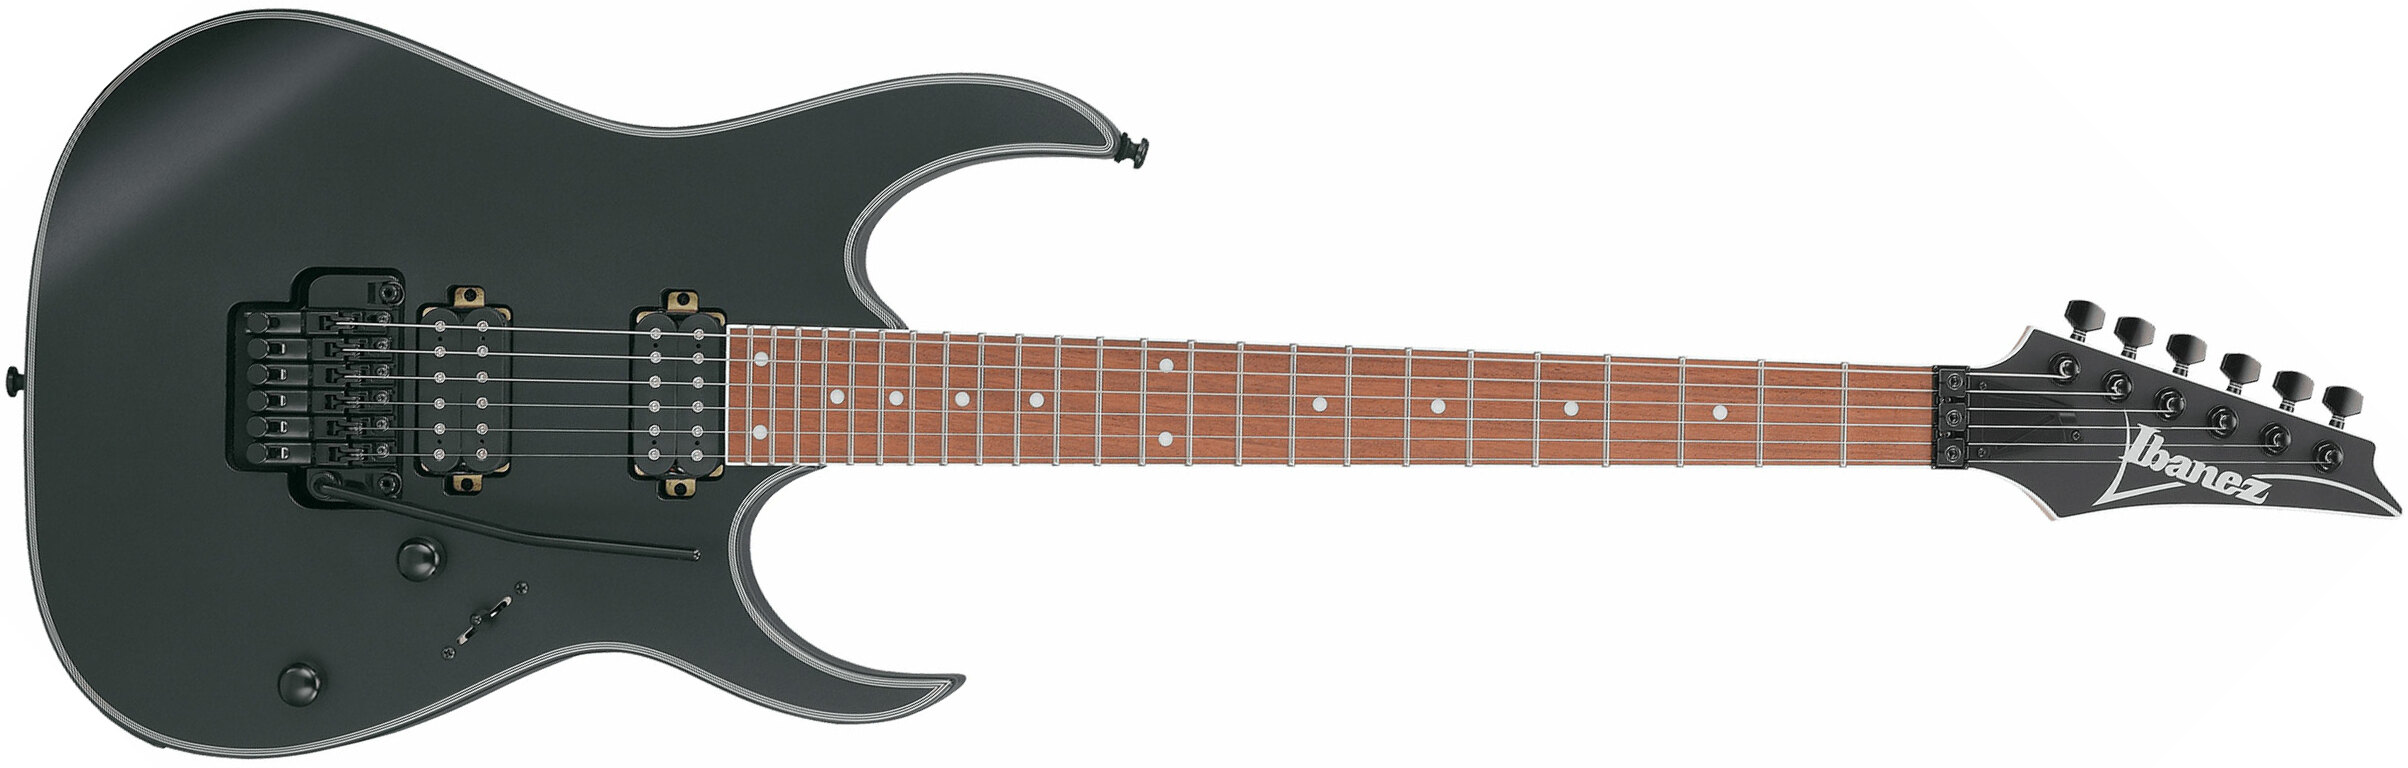 Ibanez Rg420ex Bkf Standard 2h Fr Jat - Black Flat - Guitarra eléctrica con forma de str. - Main picture